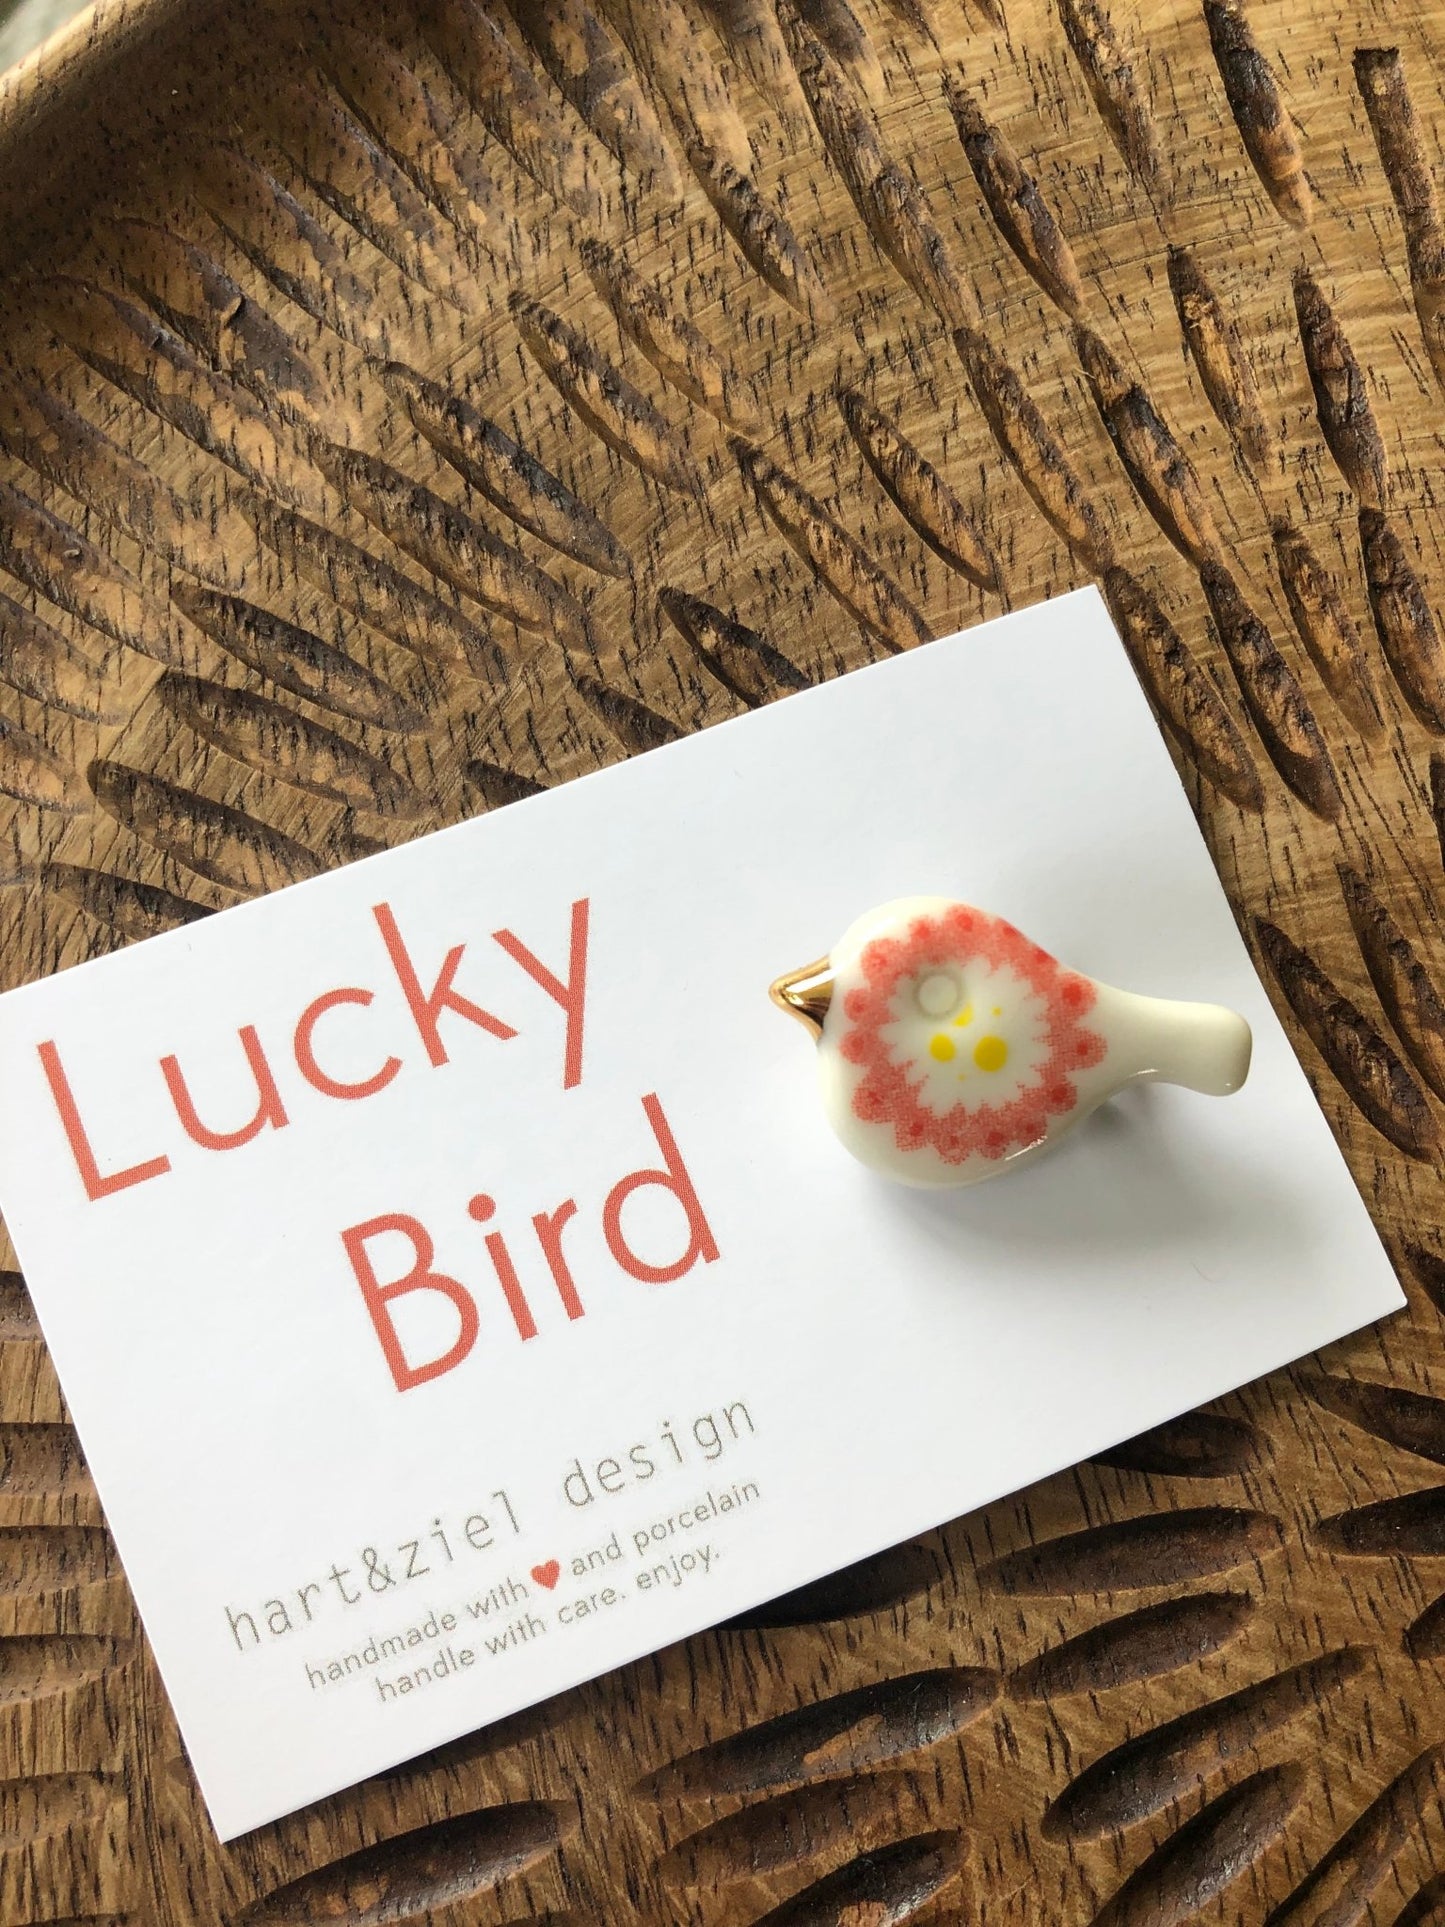 Lucky Bird - SPRING 02 - hart&ziel design